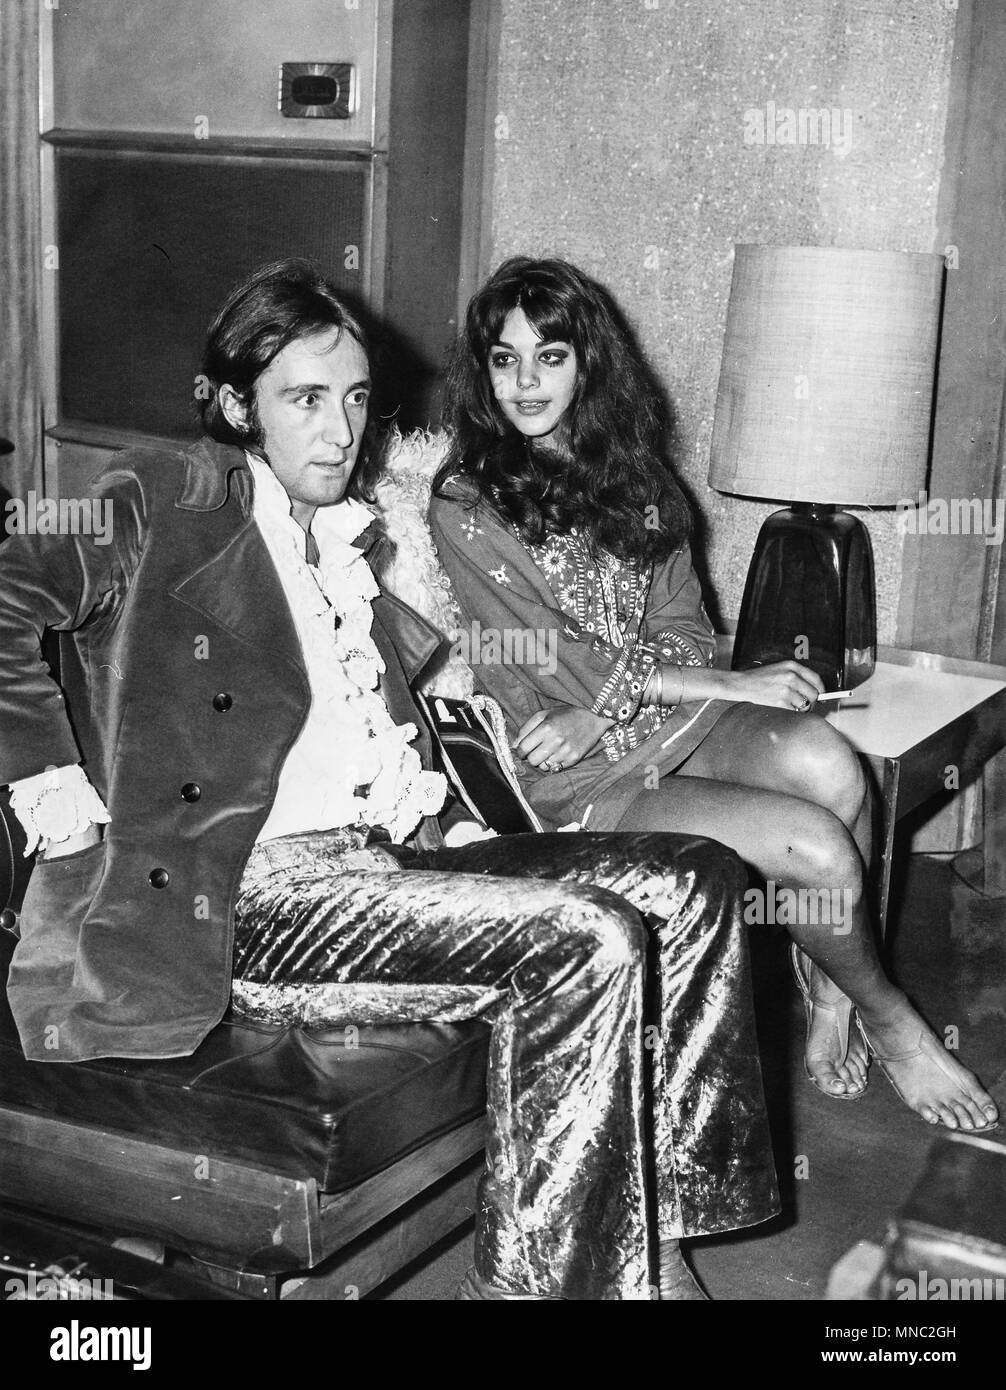 Frederic Pardo und Tina Aumont, Rom 1968 Stockfoto